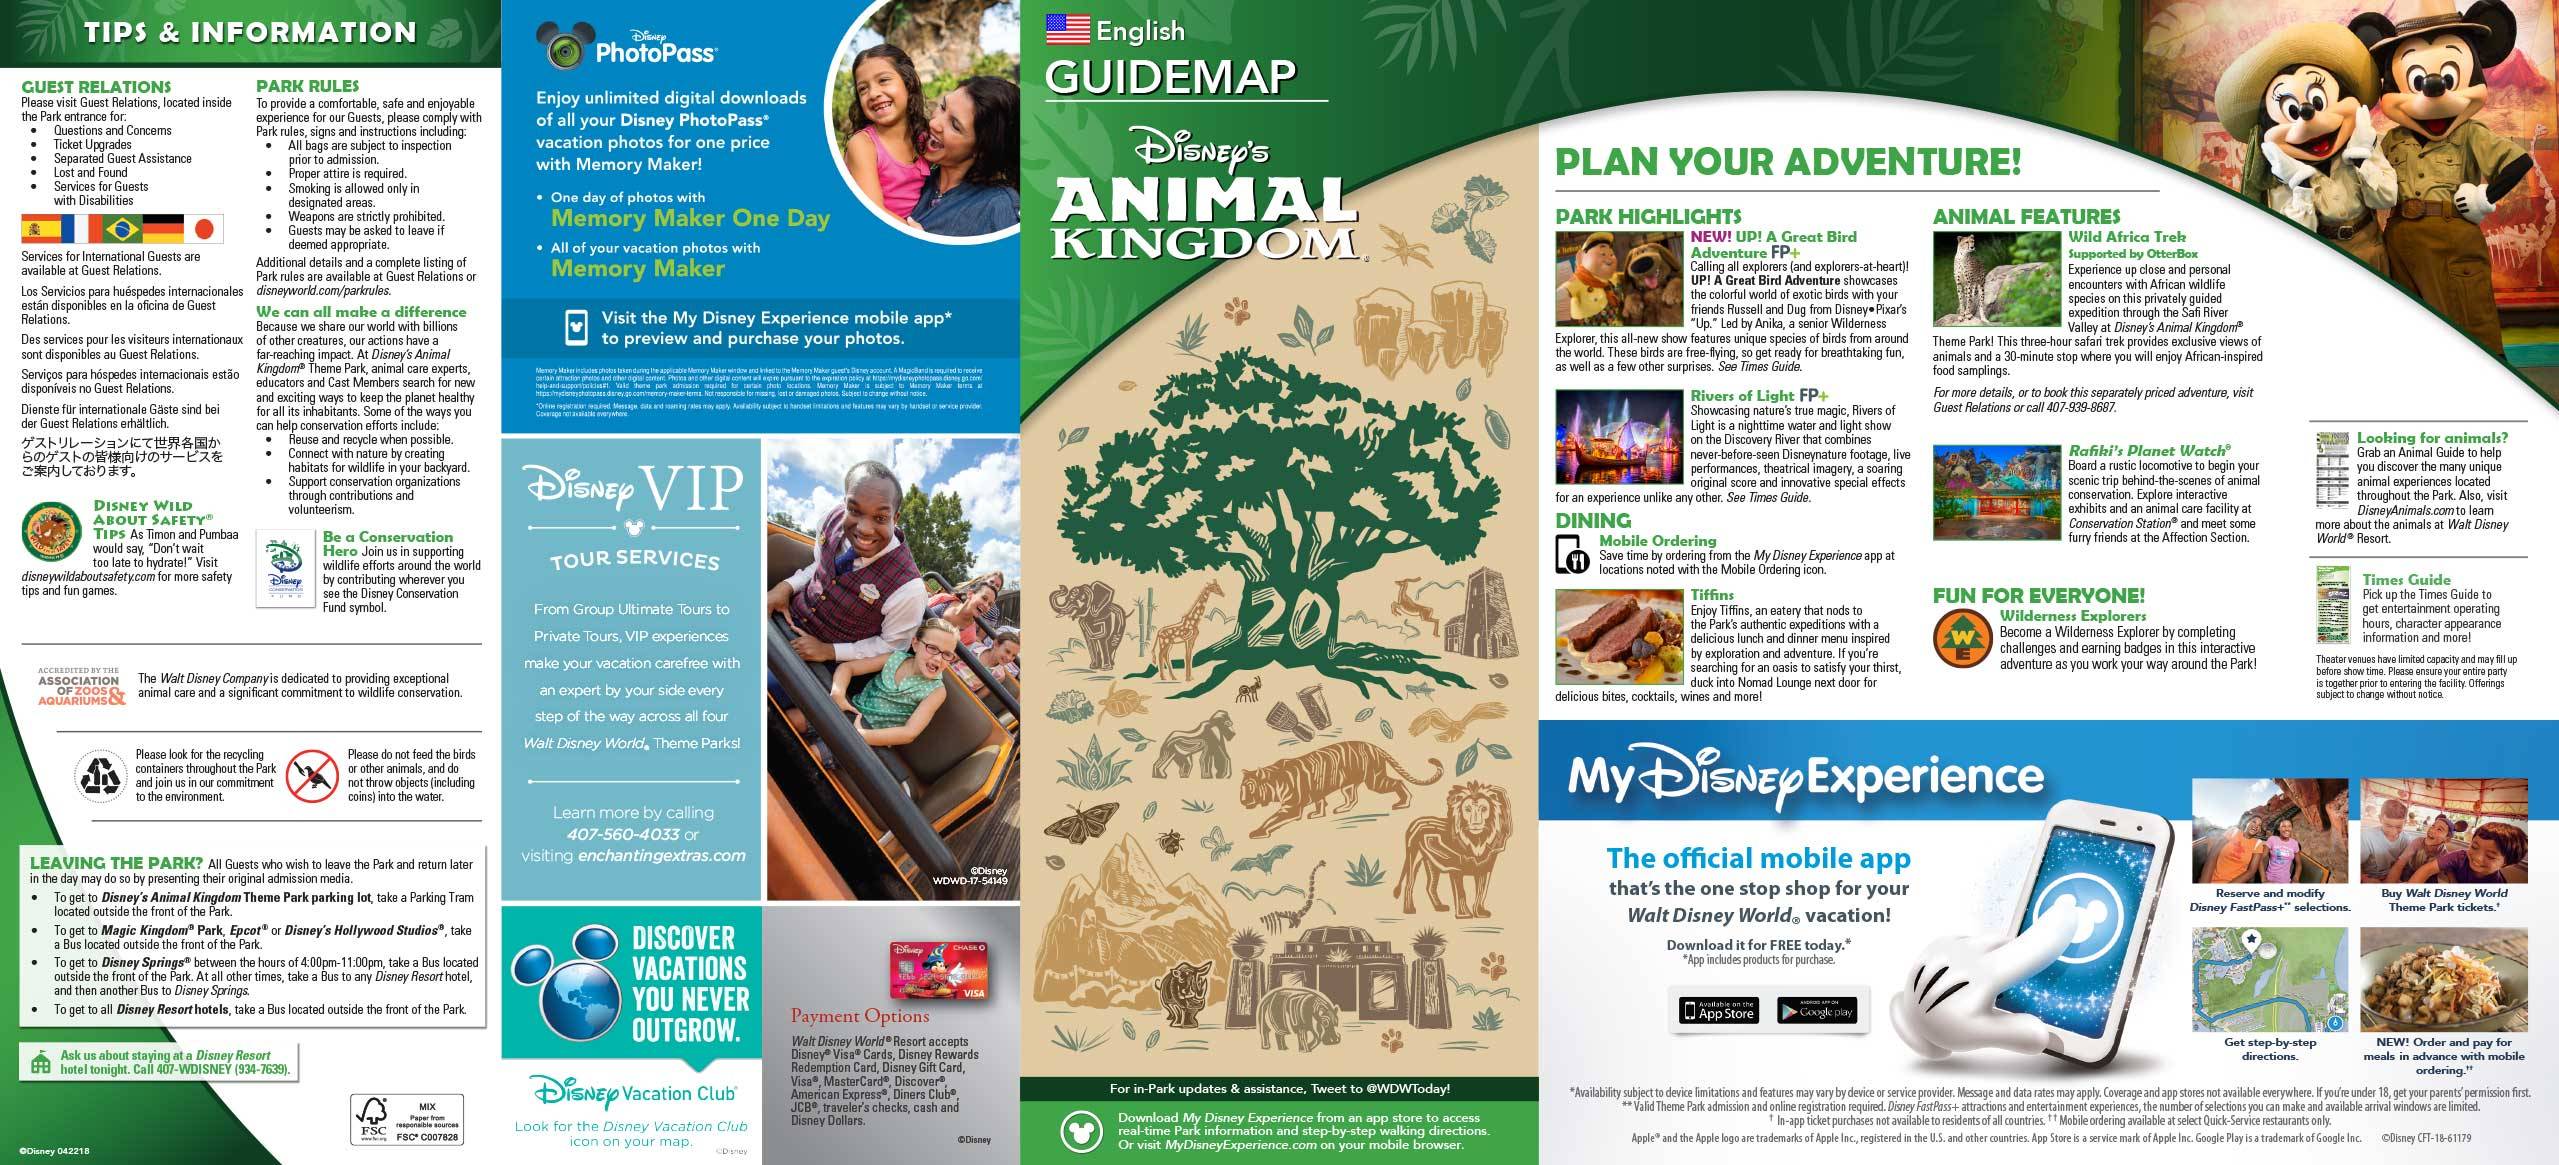 Disney's Animal Kingdom 20th Anniversary Guidemap 2018 